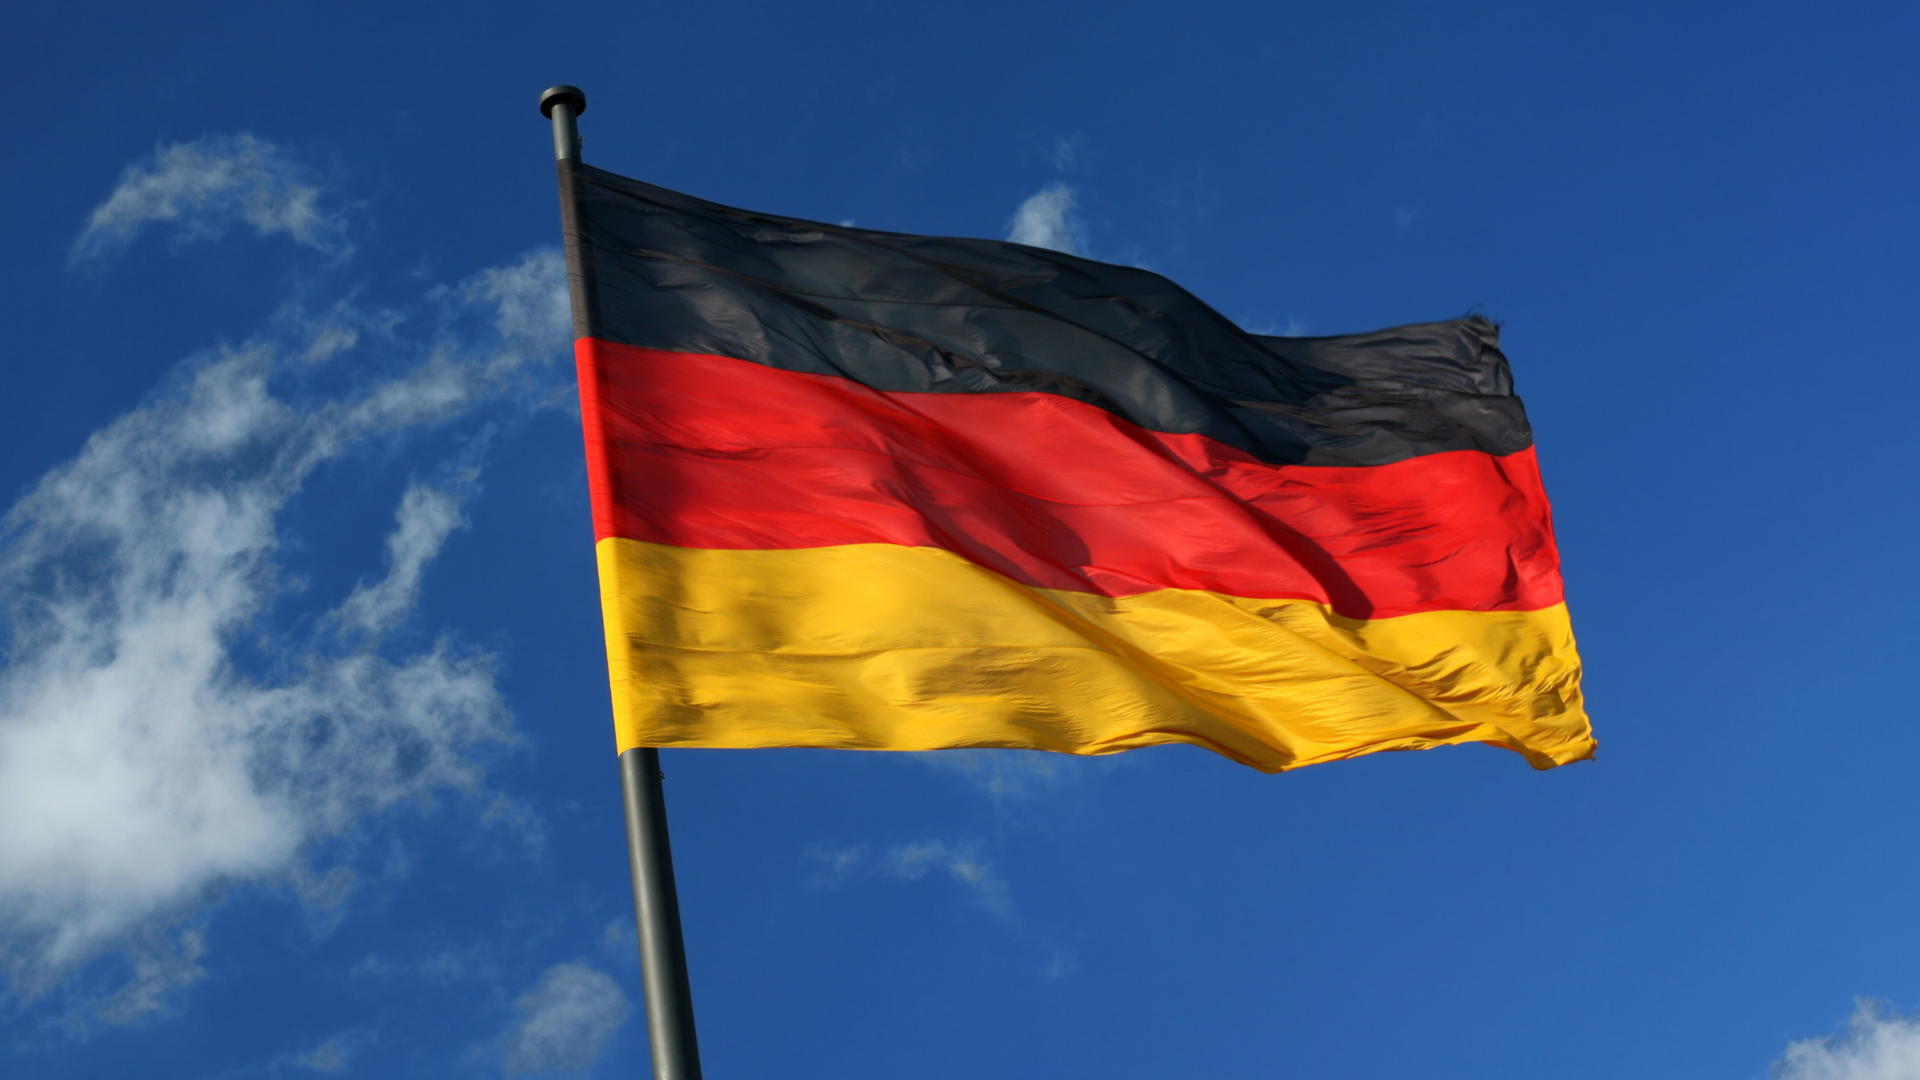 German flag flying on flag pole